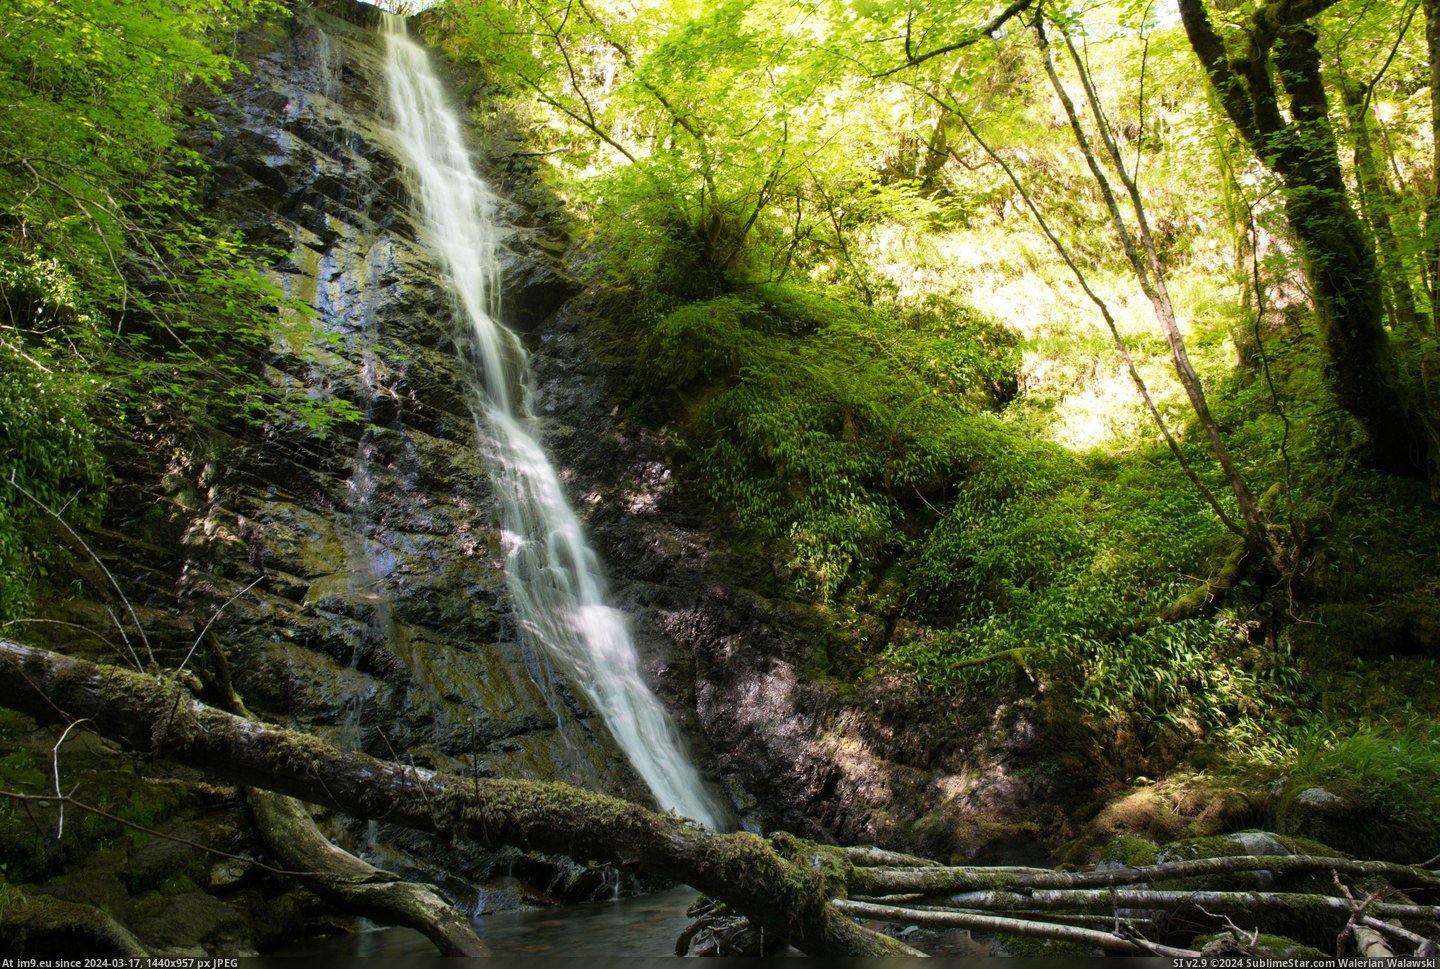 #One #Scotland #Glen #Hidden #Waterfalls [Earthporn] One of the many hidden waterfalls found in Glen Creran, Scotland [4416x2947] Pic. (Obraz z album My r/EARTHPORN favs))